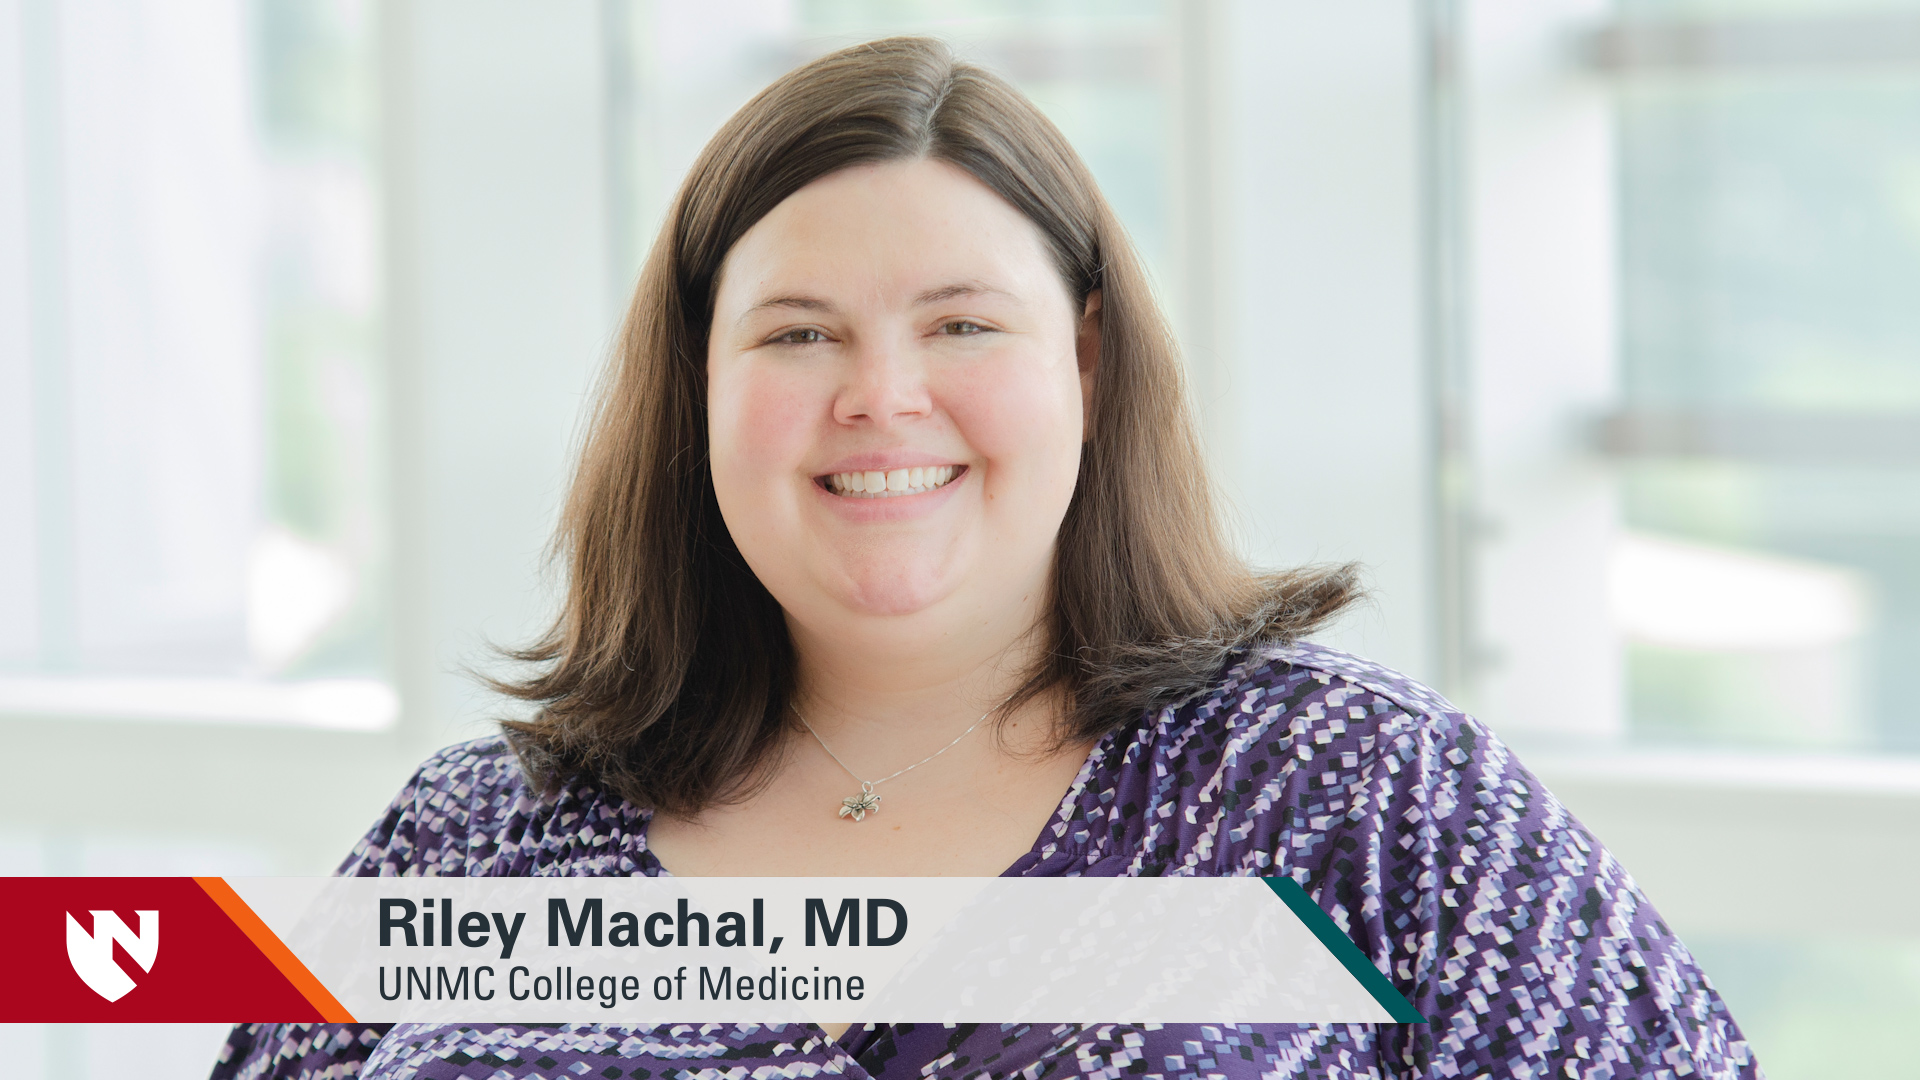 Ask UNMC! Riley Machal, MD, UNMC College of Medicine